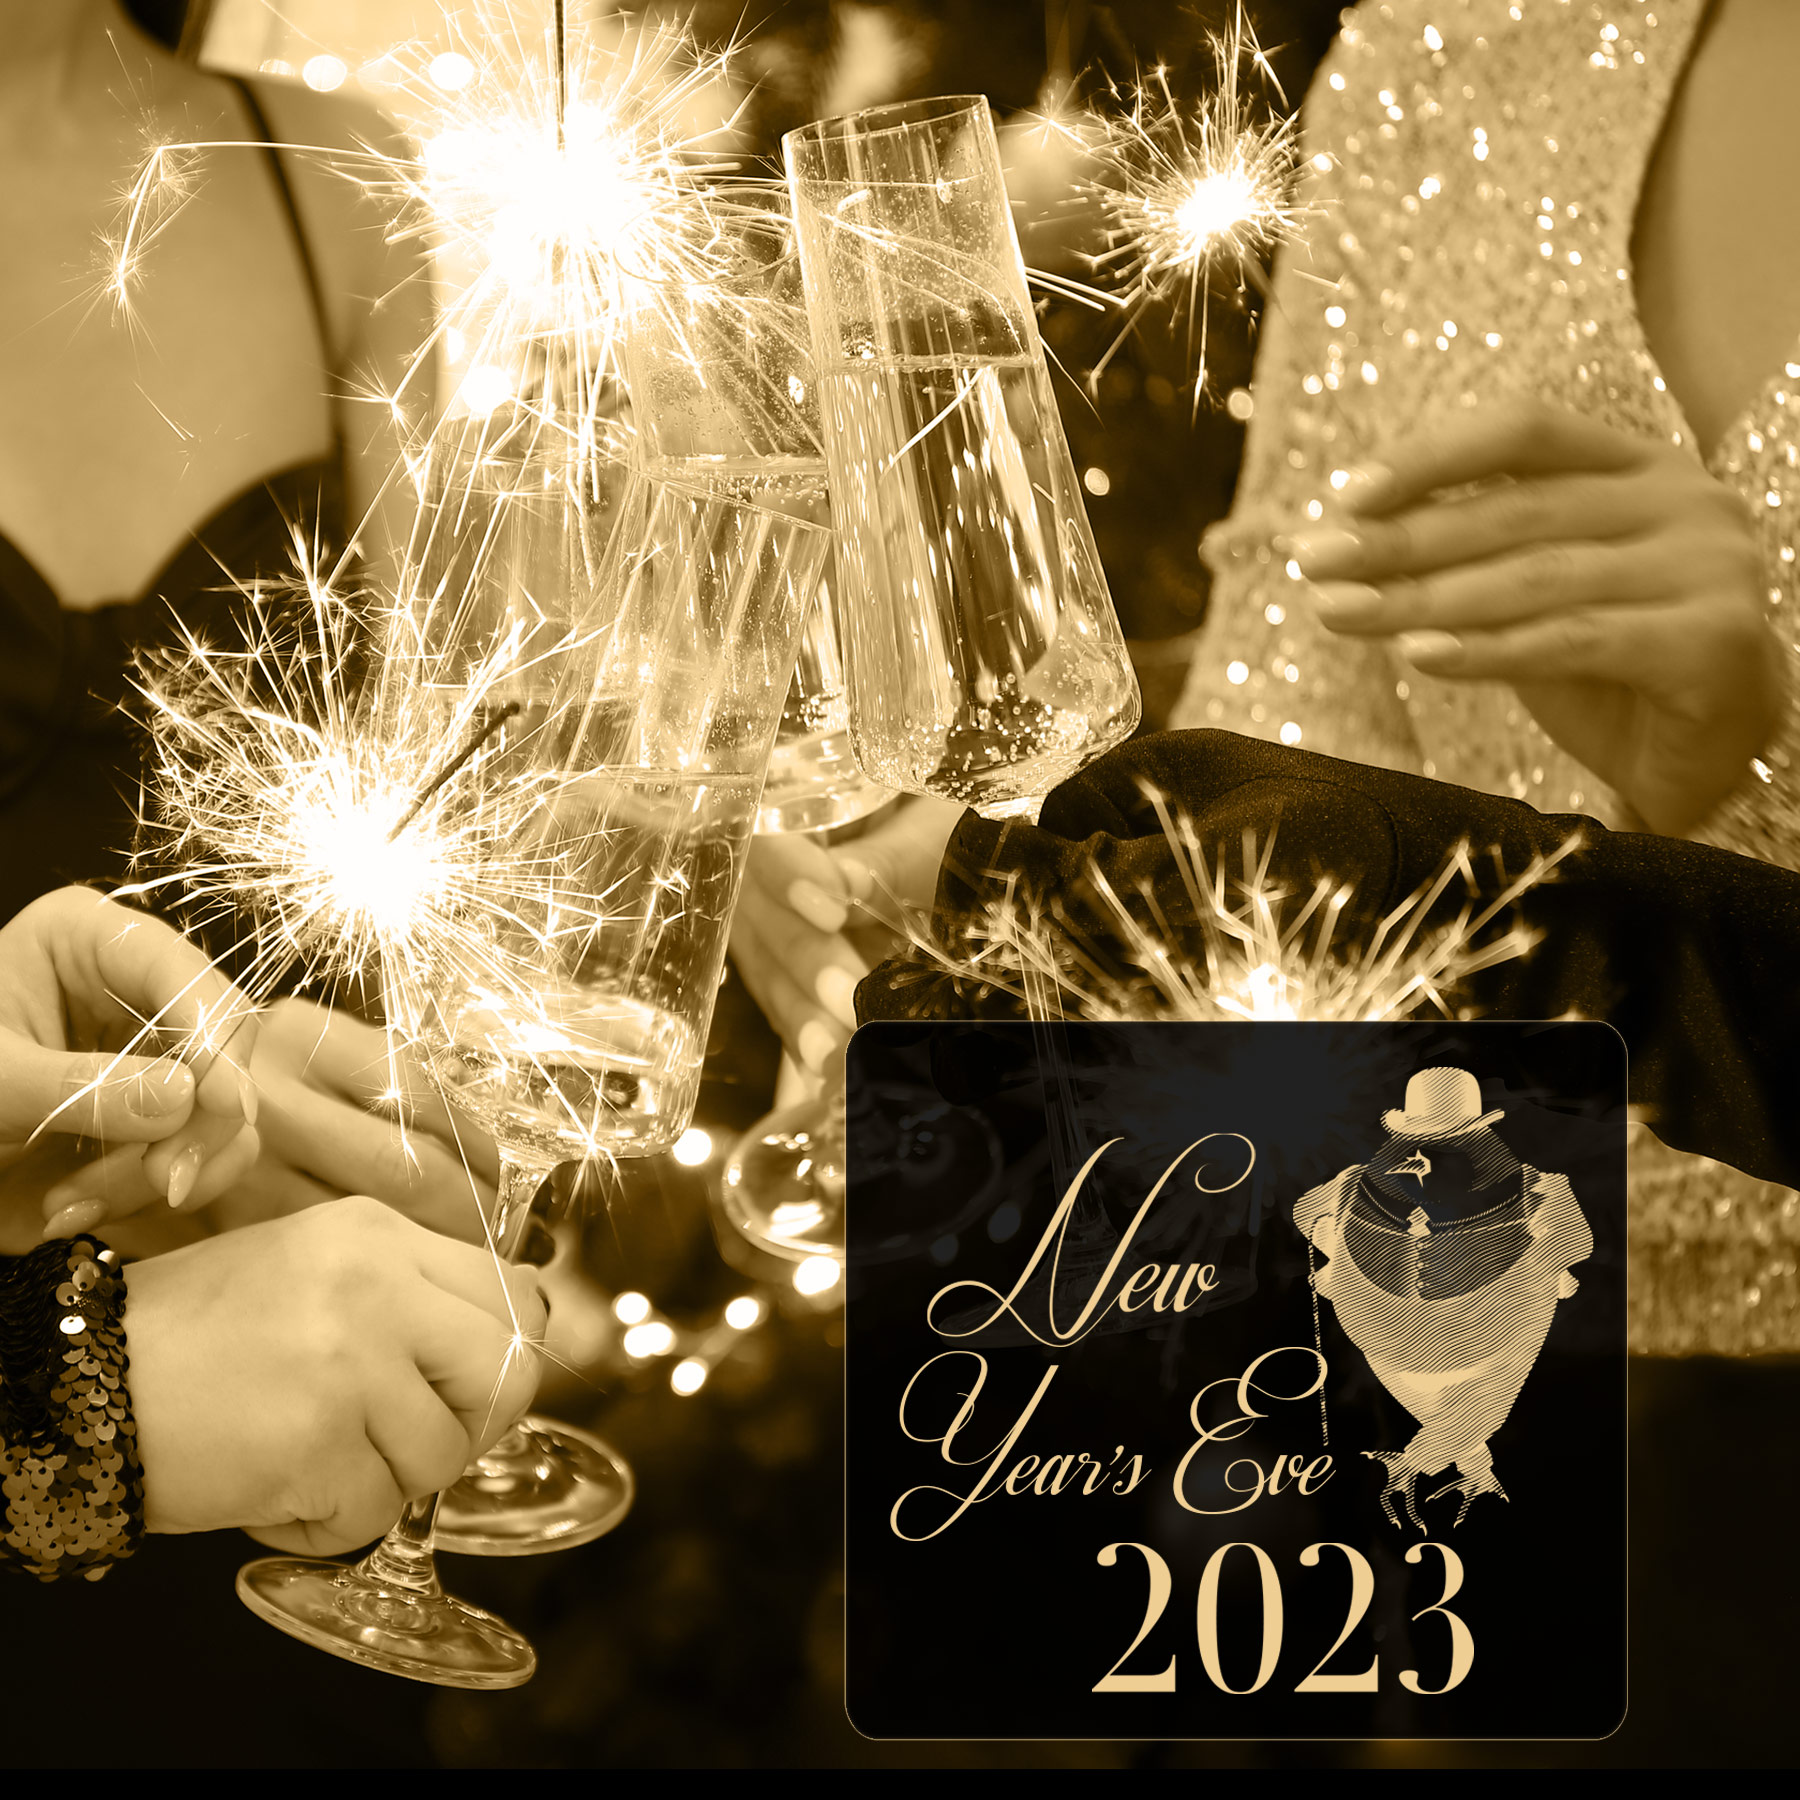 David Burke Tavern New Year's Eve 2023